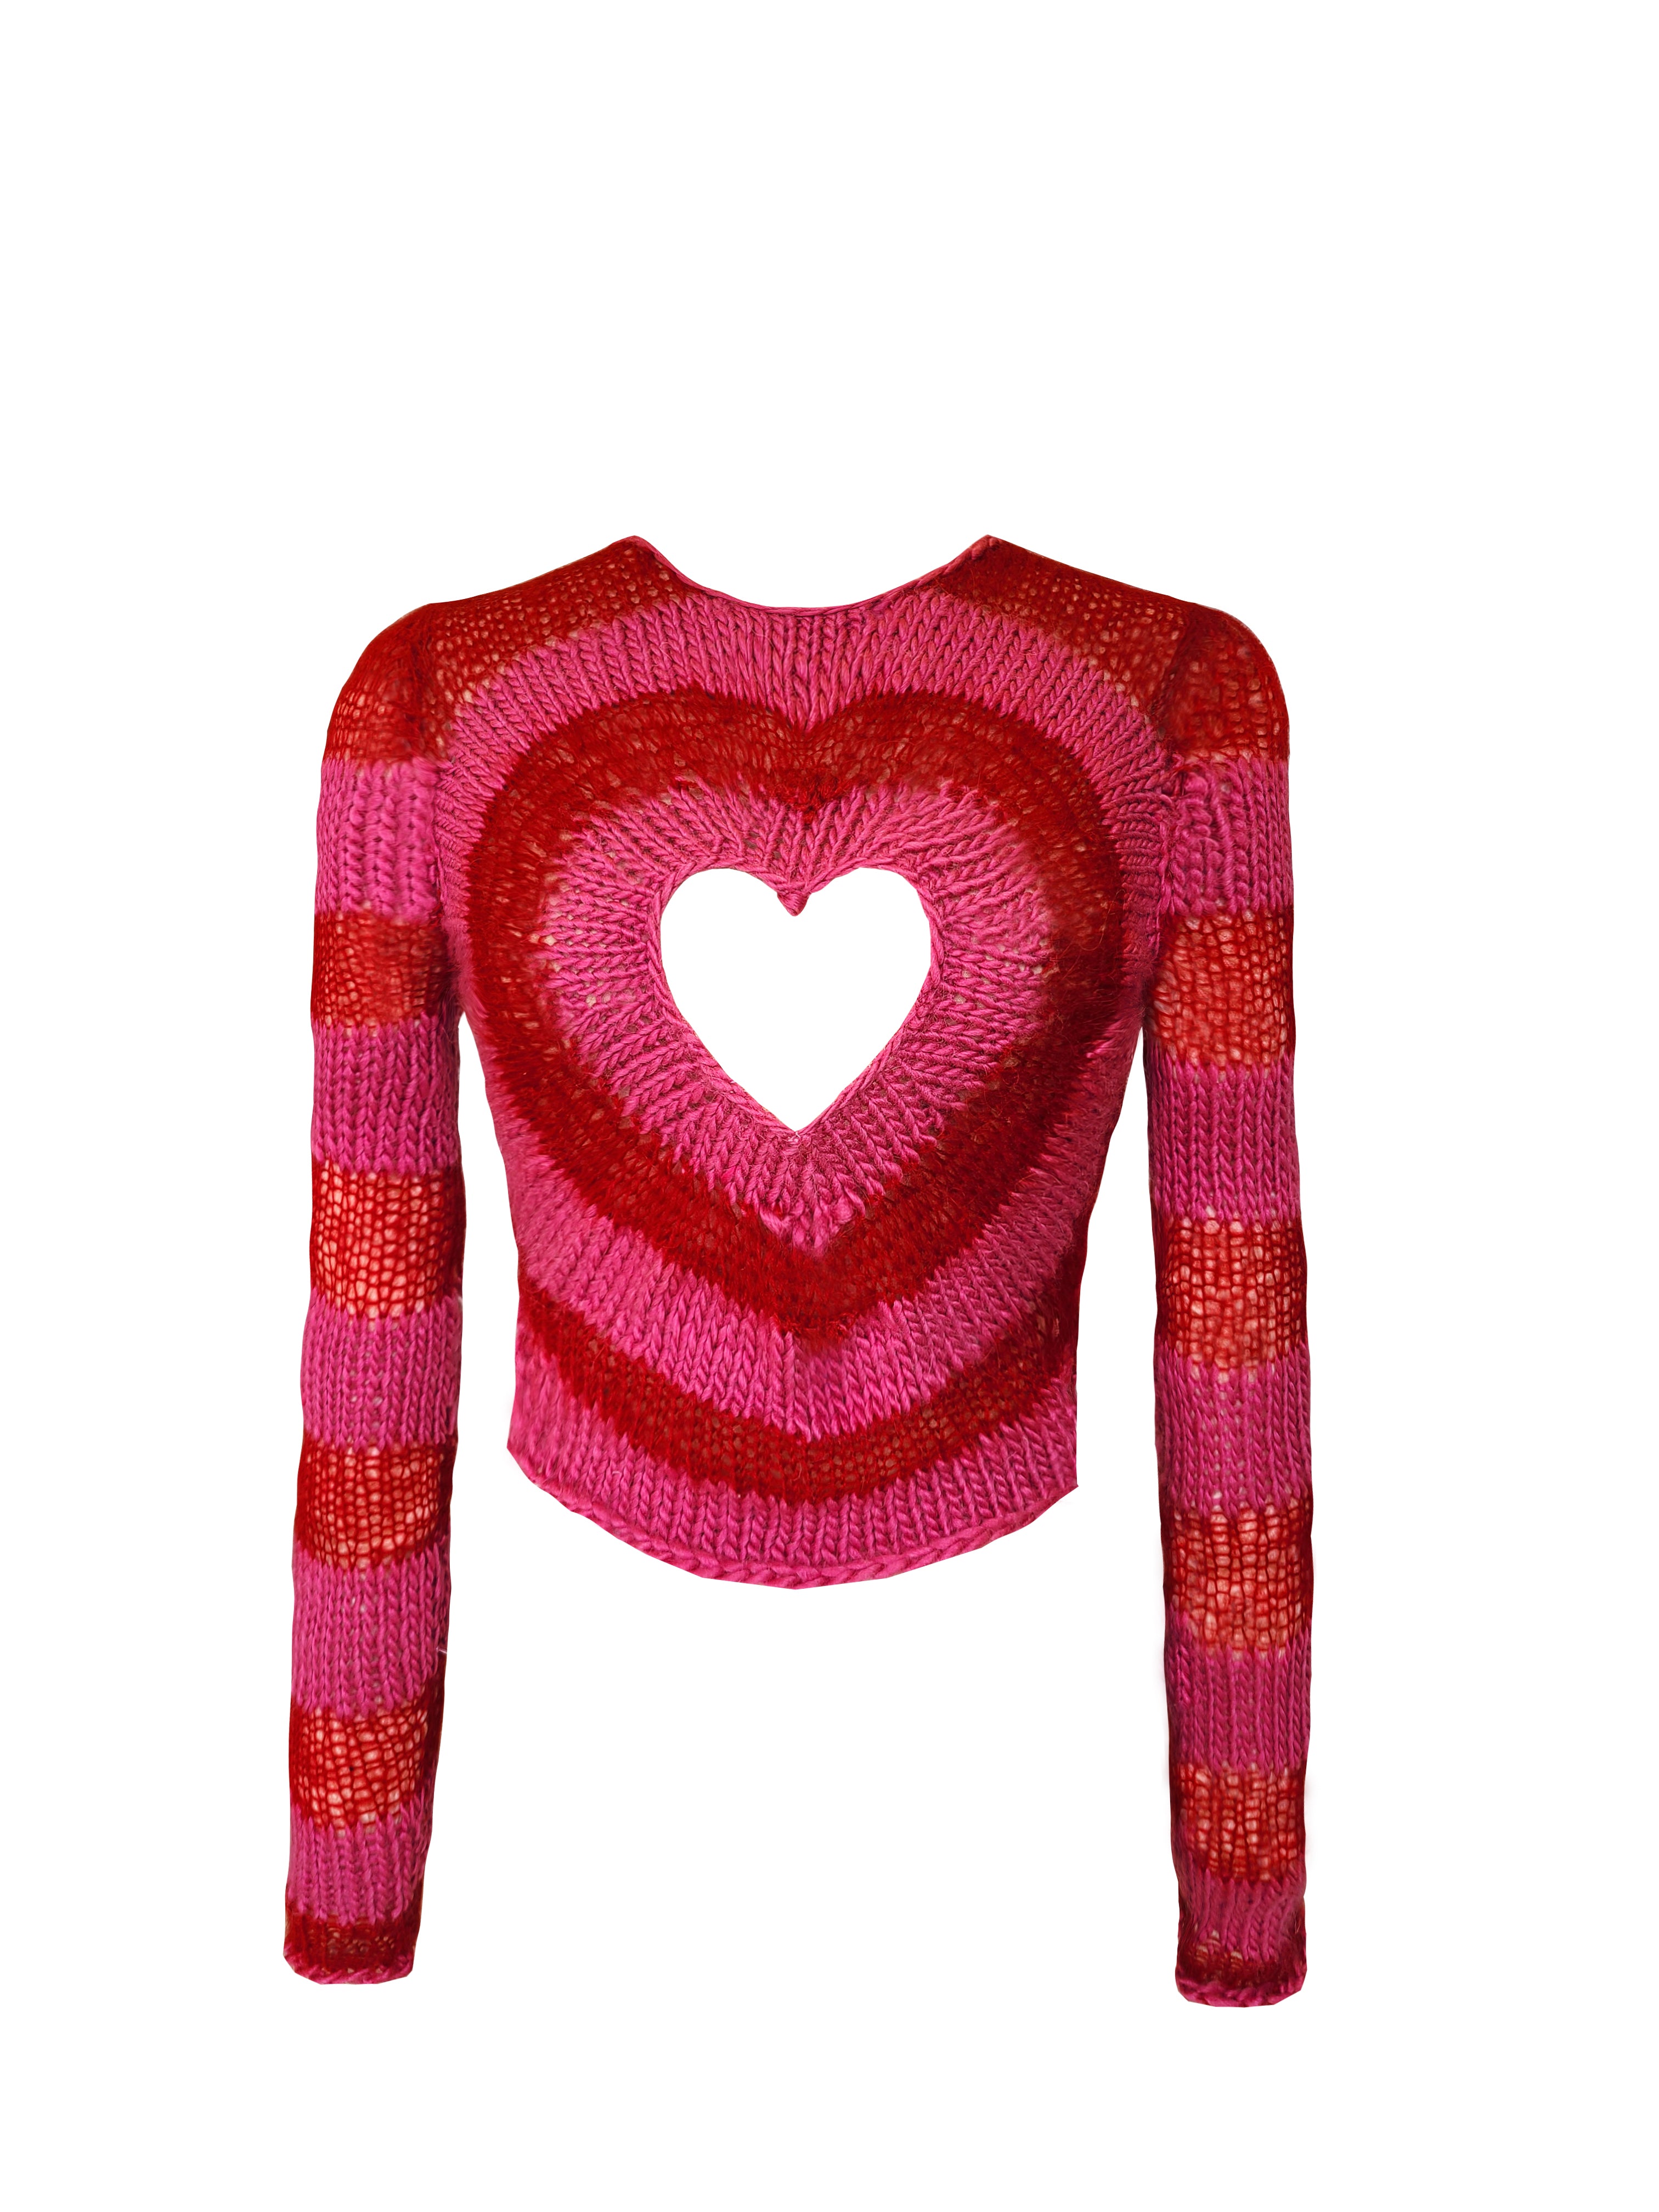 NEOITY From My Heart Knit Sweater